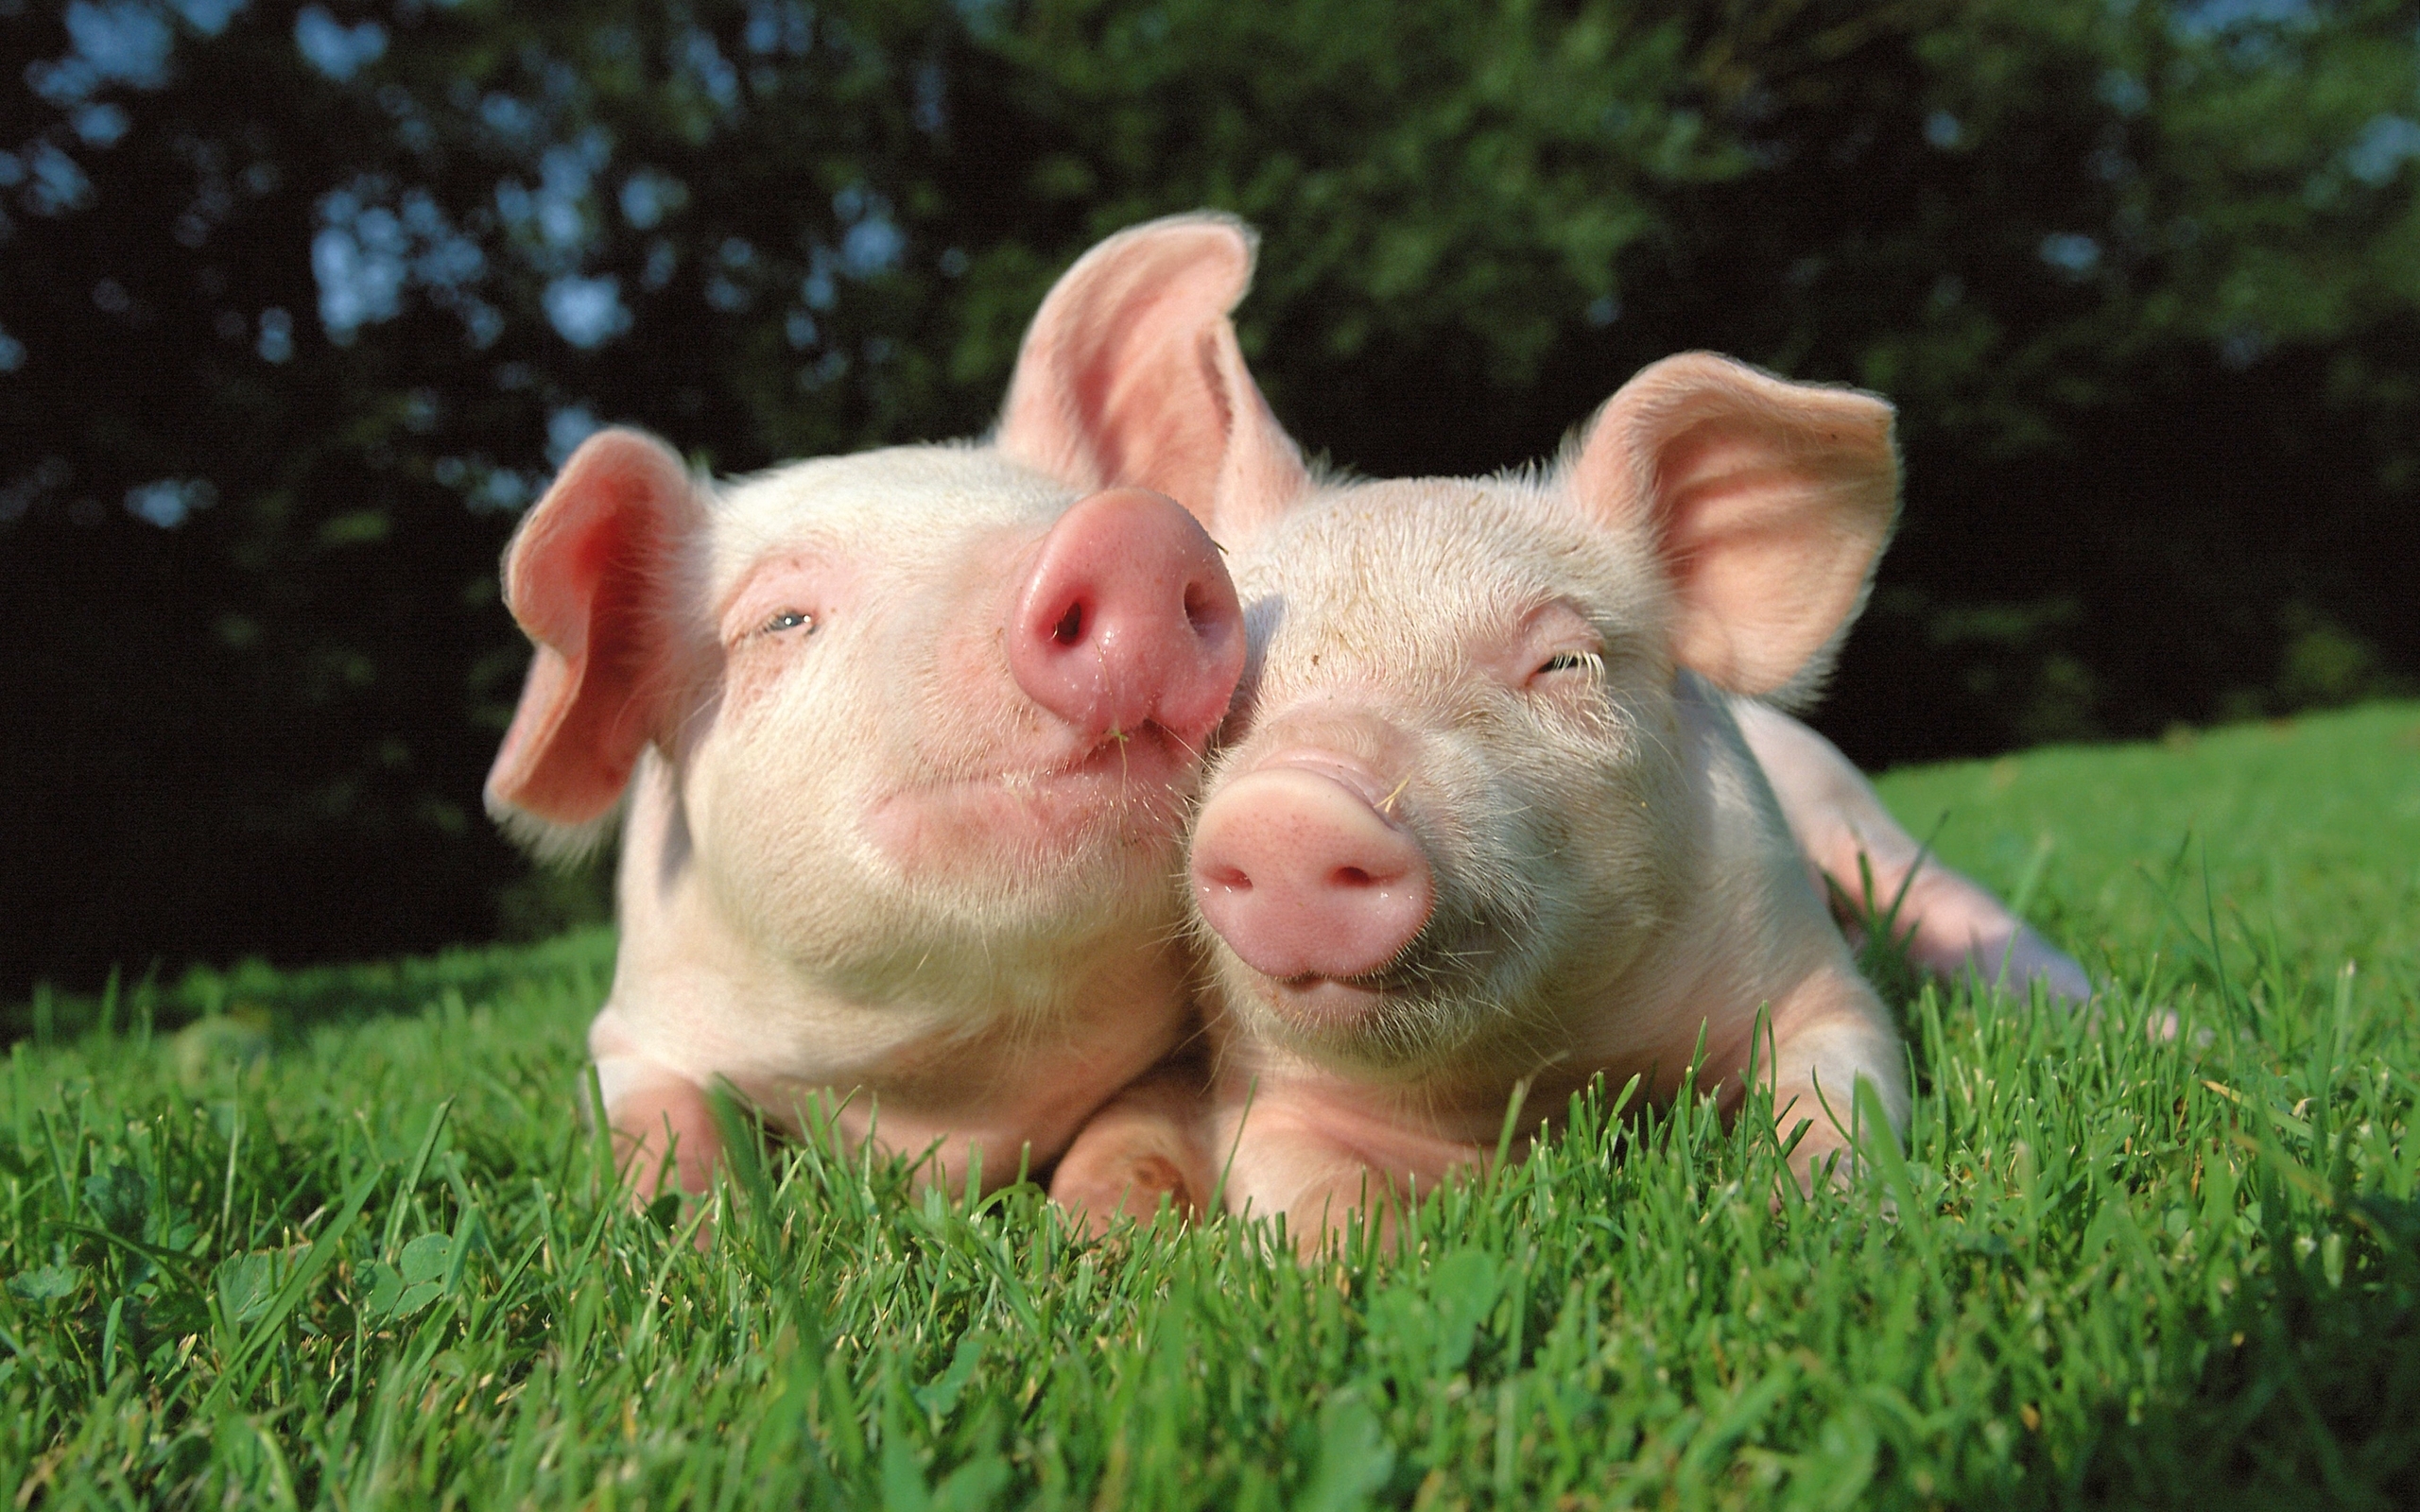 Image: Pair, pig, pigs, pink, glade, grass, green, grow soft, the sun